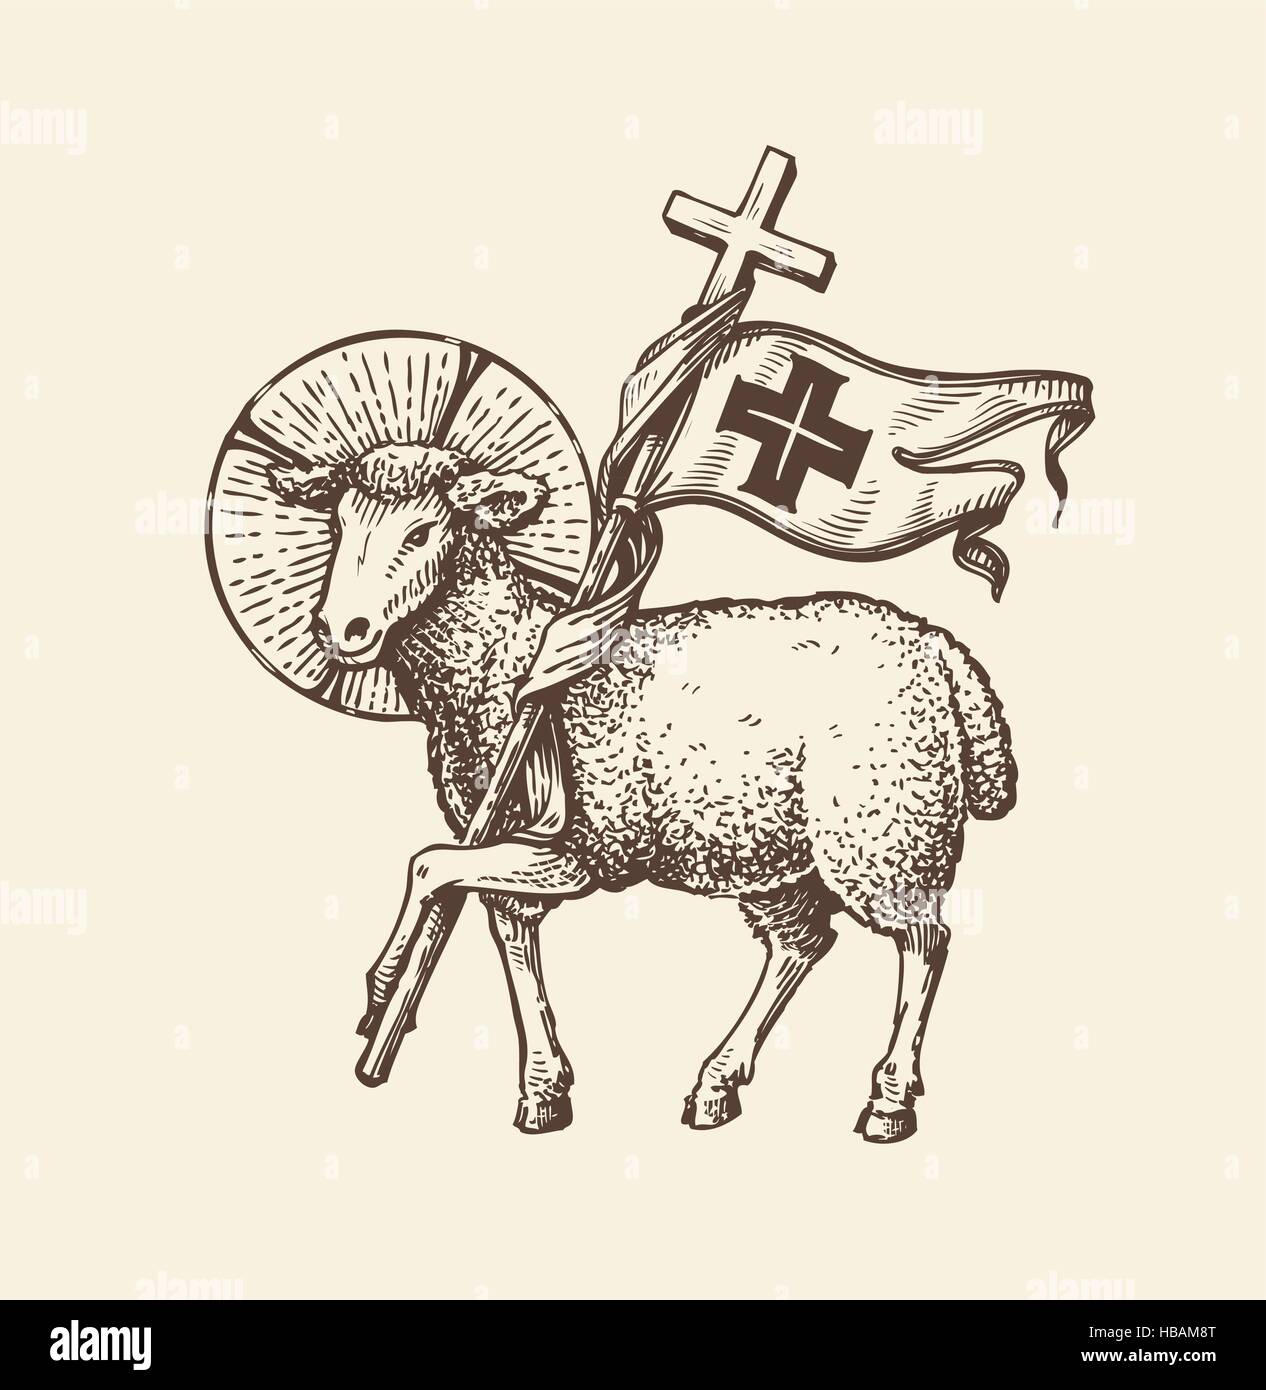 Lamb or sheep holding cross. Religious symbol. Sketch vector Stock Vector